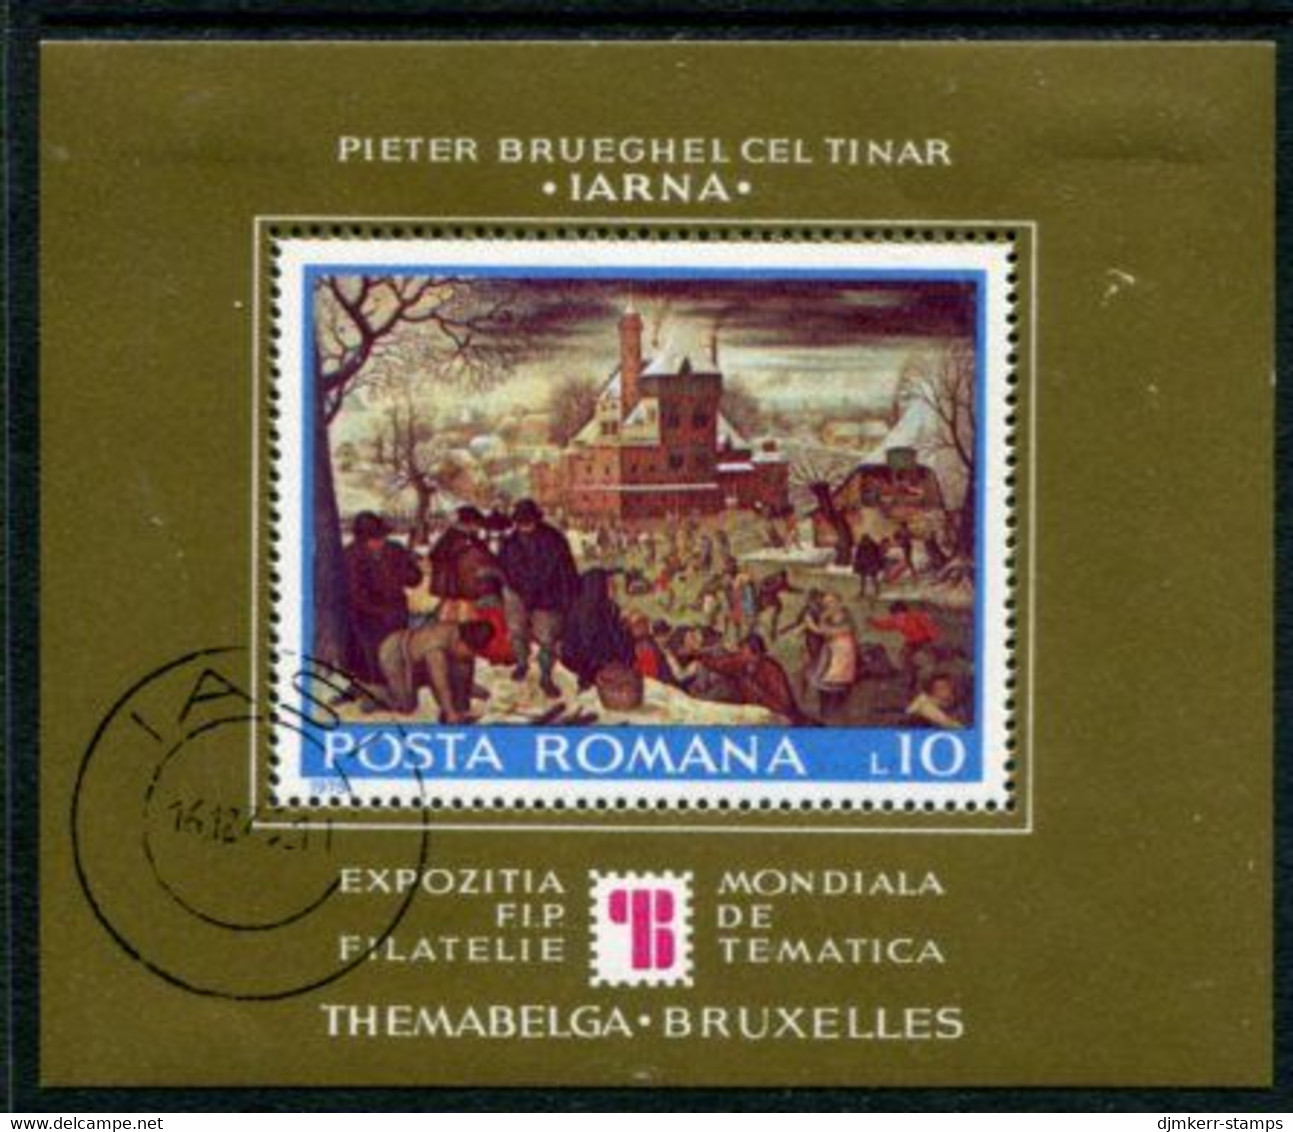 ROMANIA 1975 THEMABELGA Stamp Exhibition Block Used.  Michel Block 127 - Blocks & Sheetlets